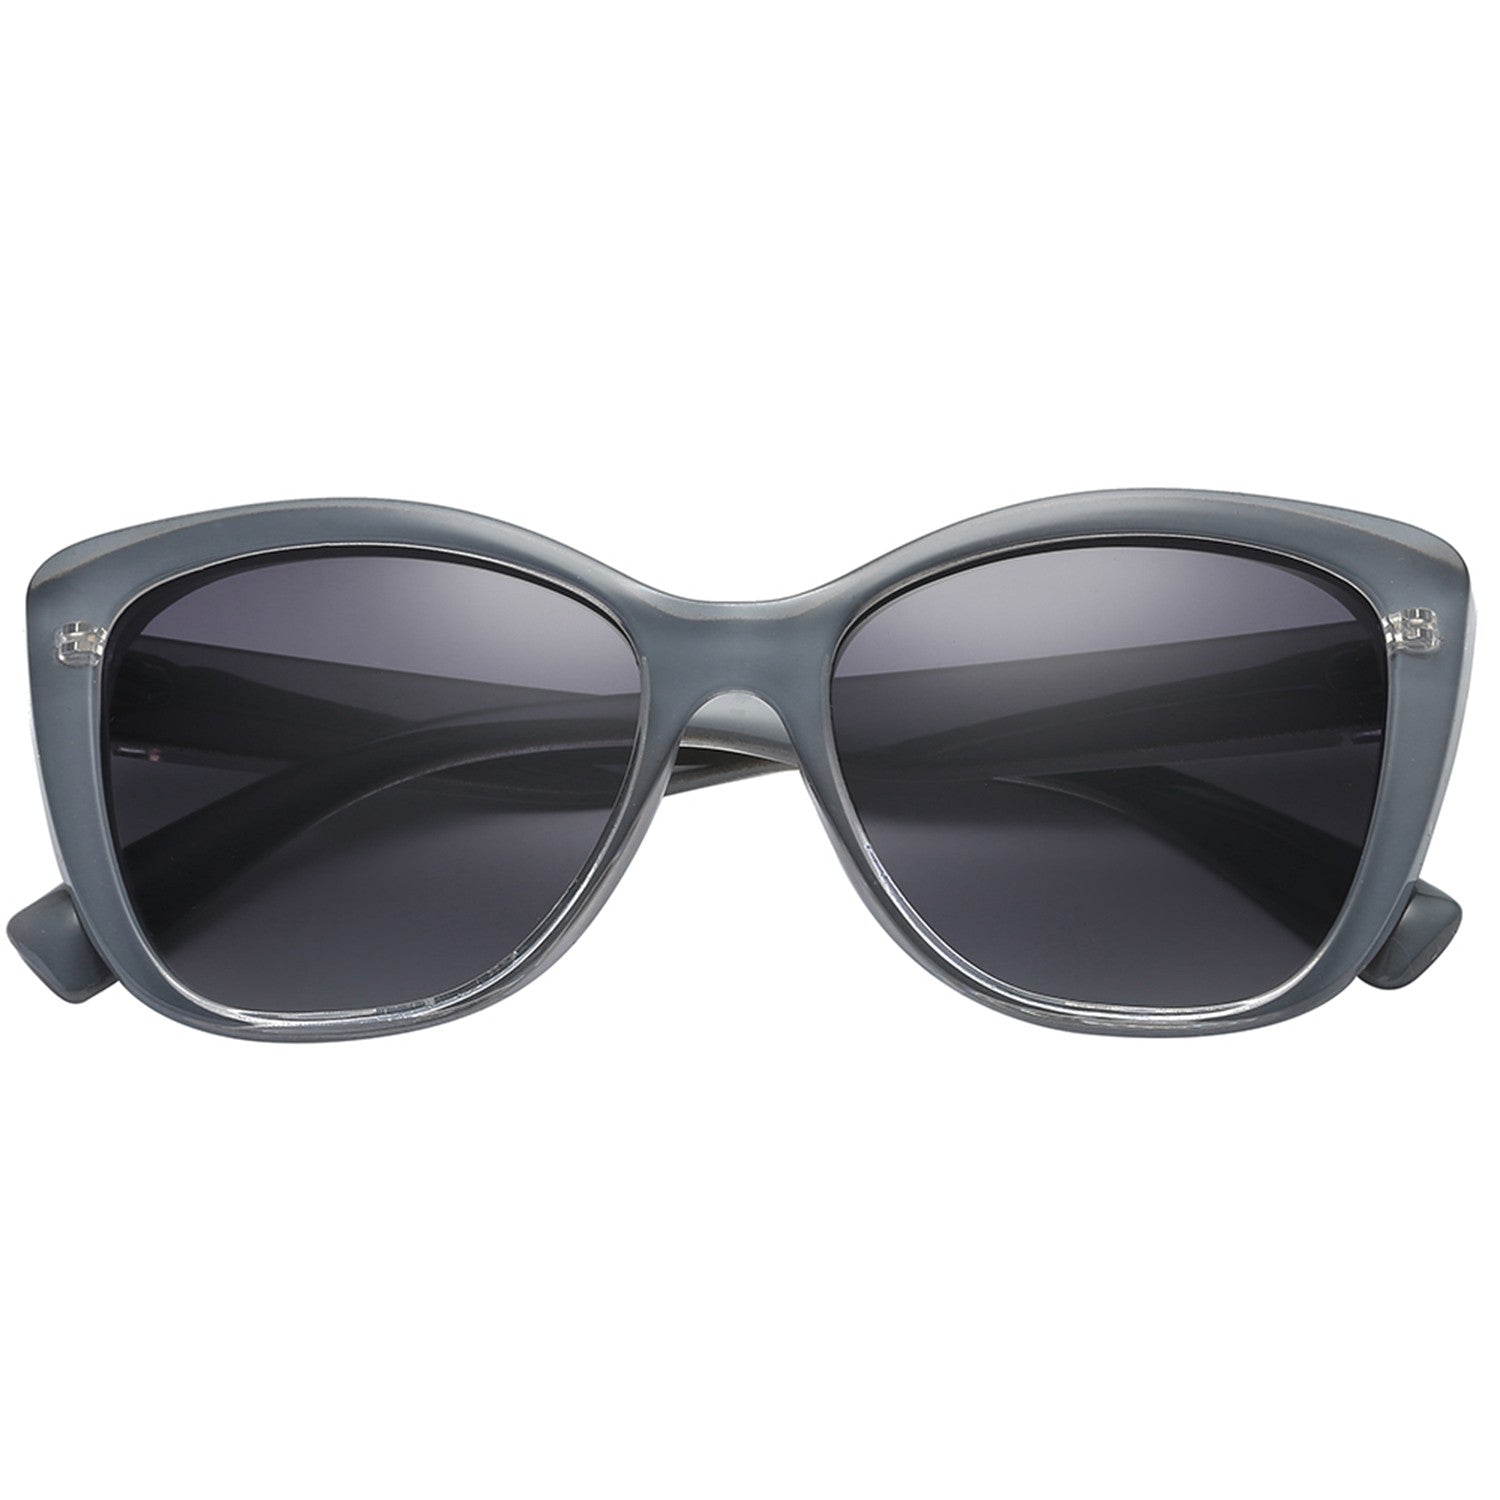 Polarspex Polarized Jackie-O Cat Eyes Style Sunglasses with Slate Gray Frames and Polarized Gradient Smoke Lenses for Women